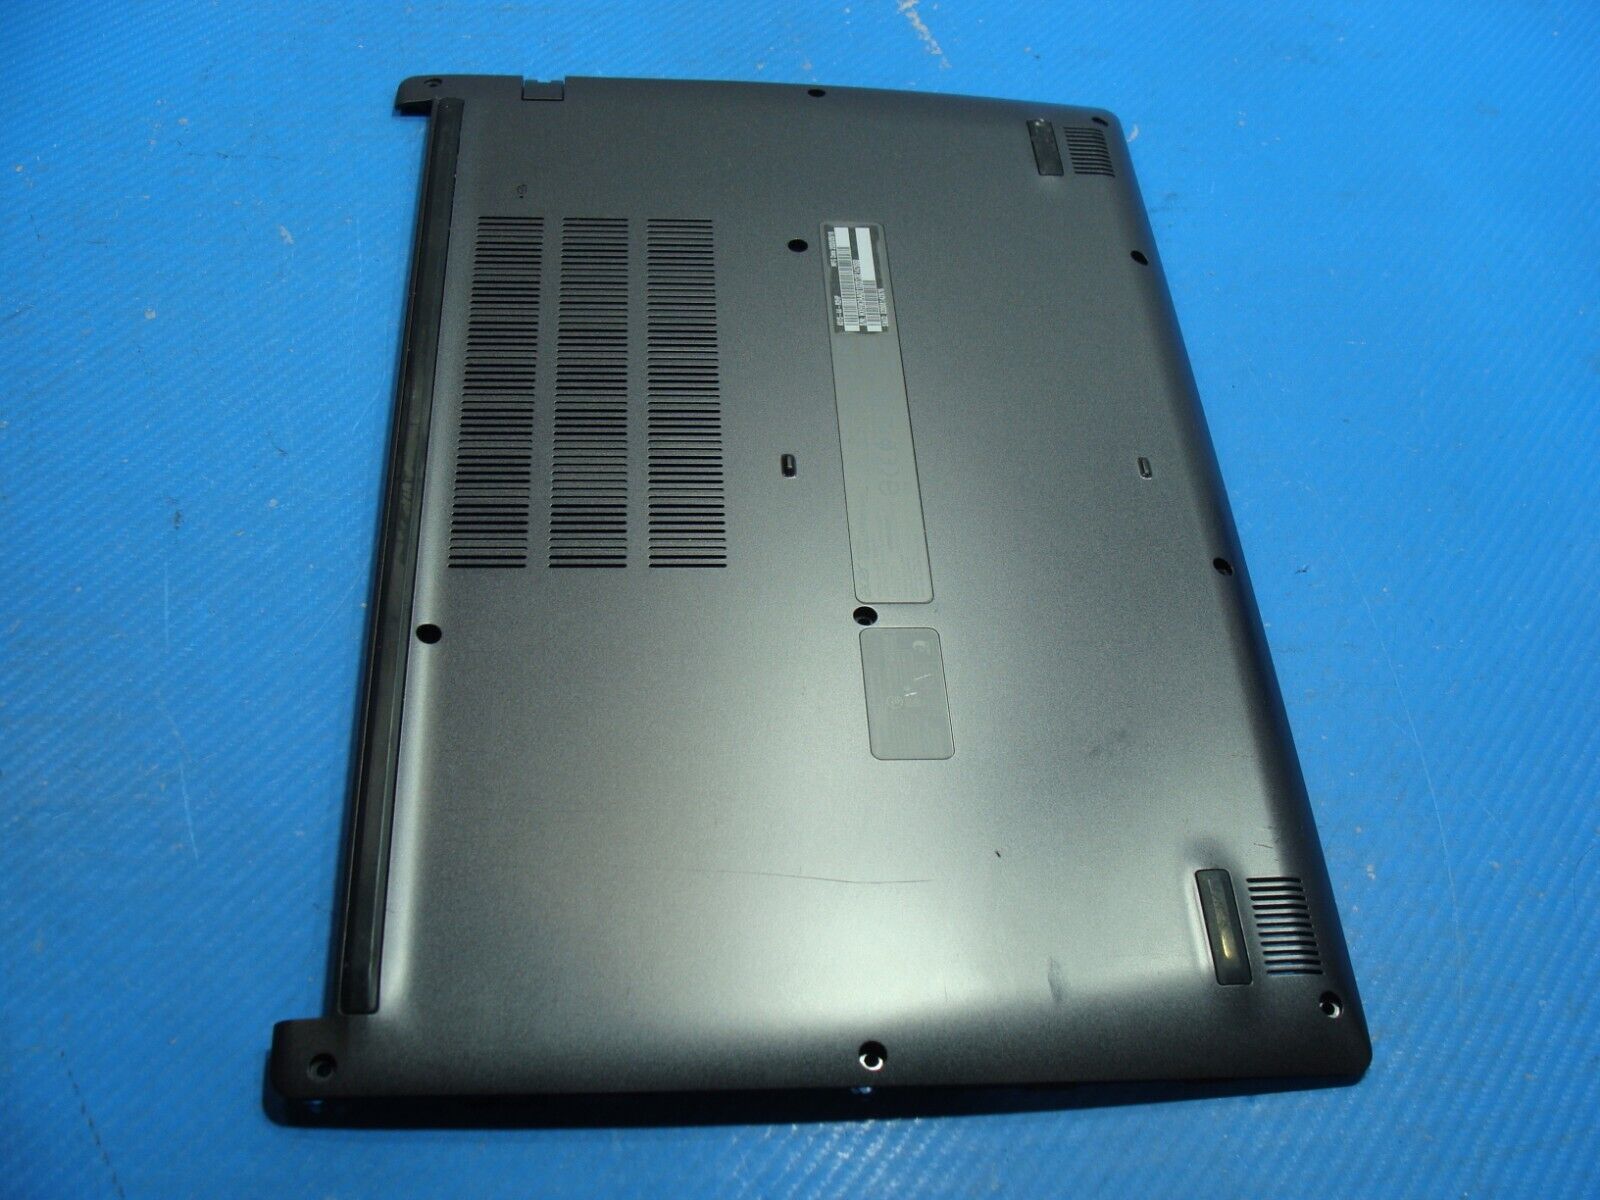 Acer Aspire A515-44-R2HP 15.6